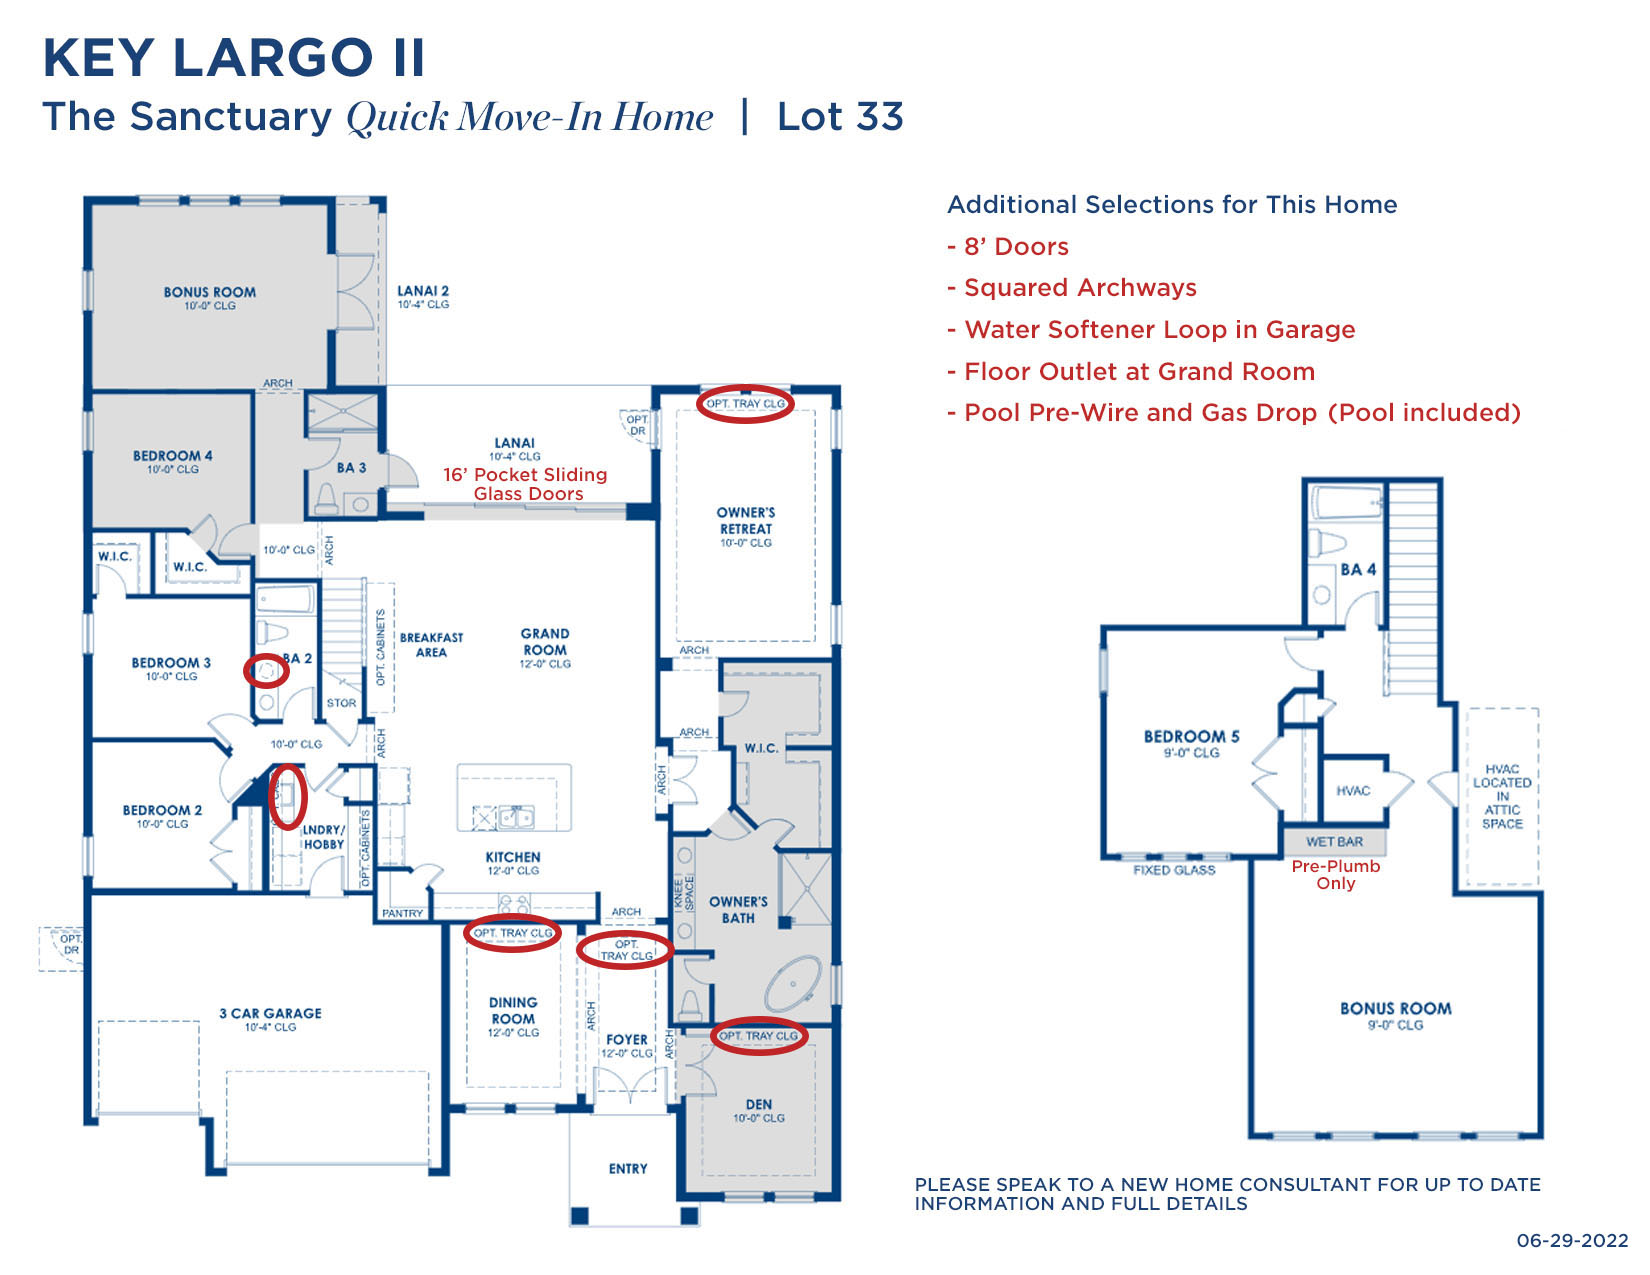 TS KEY LARGO II 33 6.29.22 Floorplan